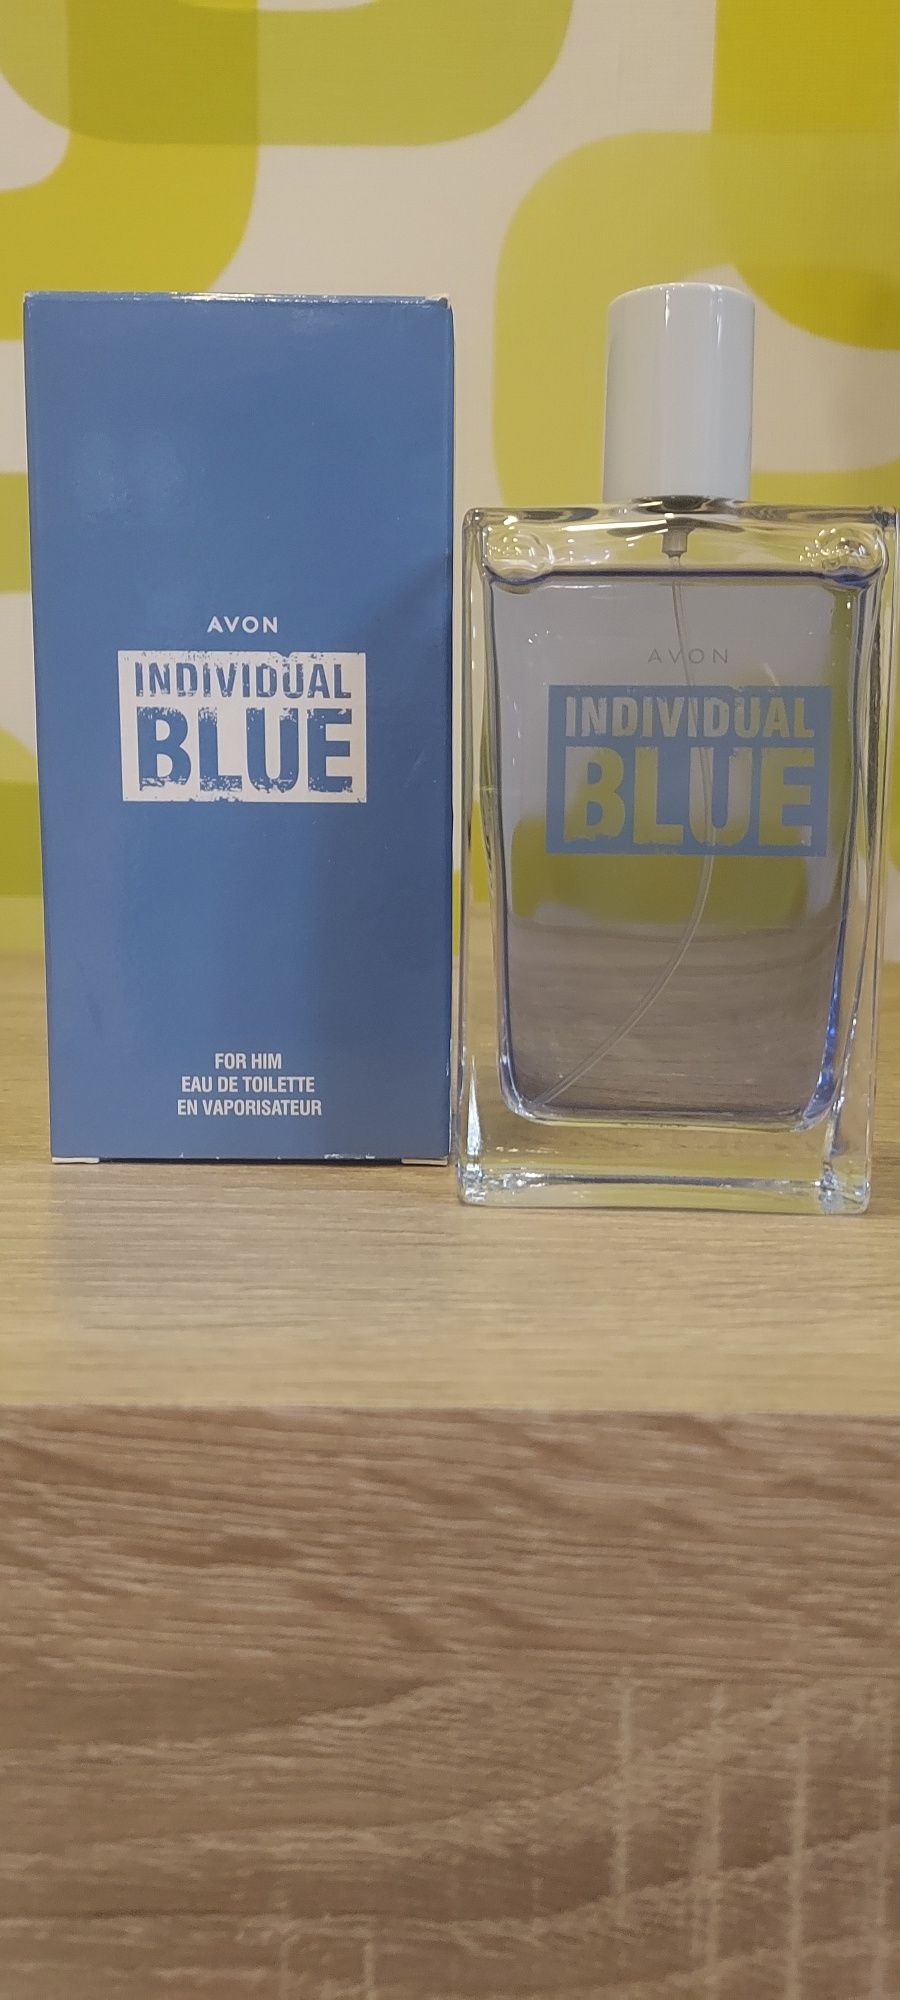 Individual Blue Avon